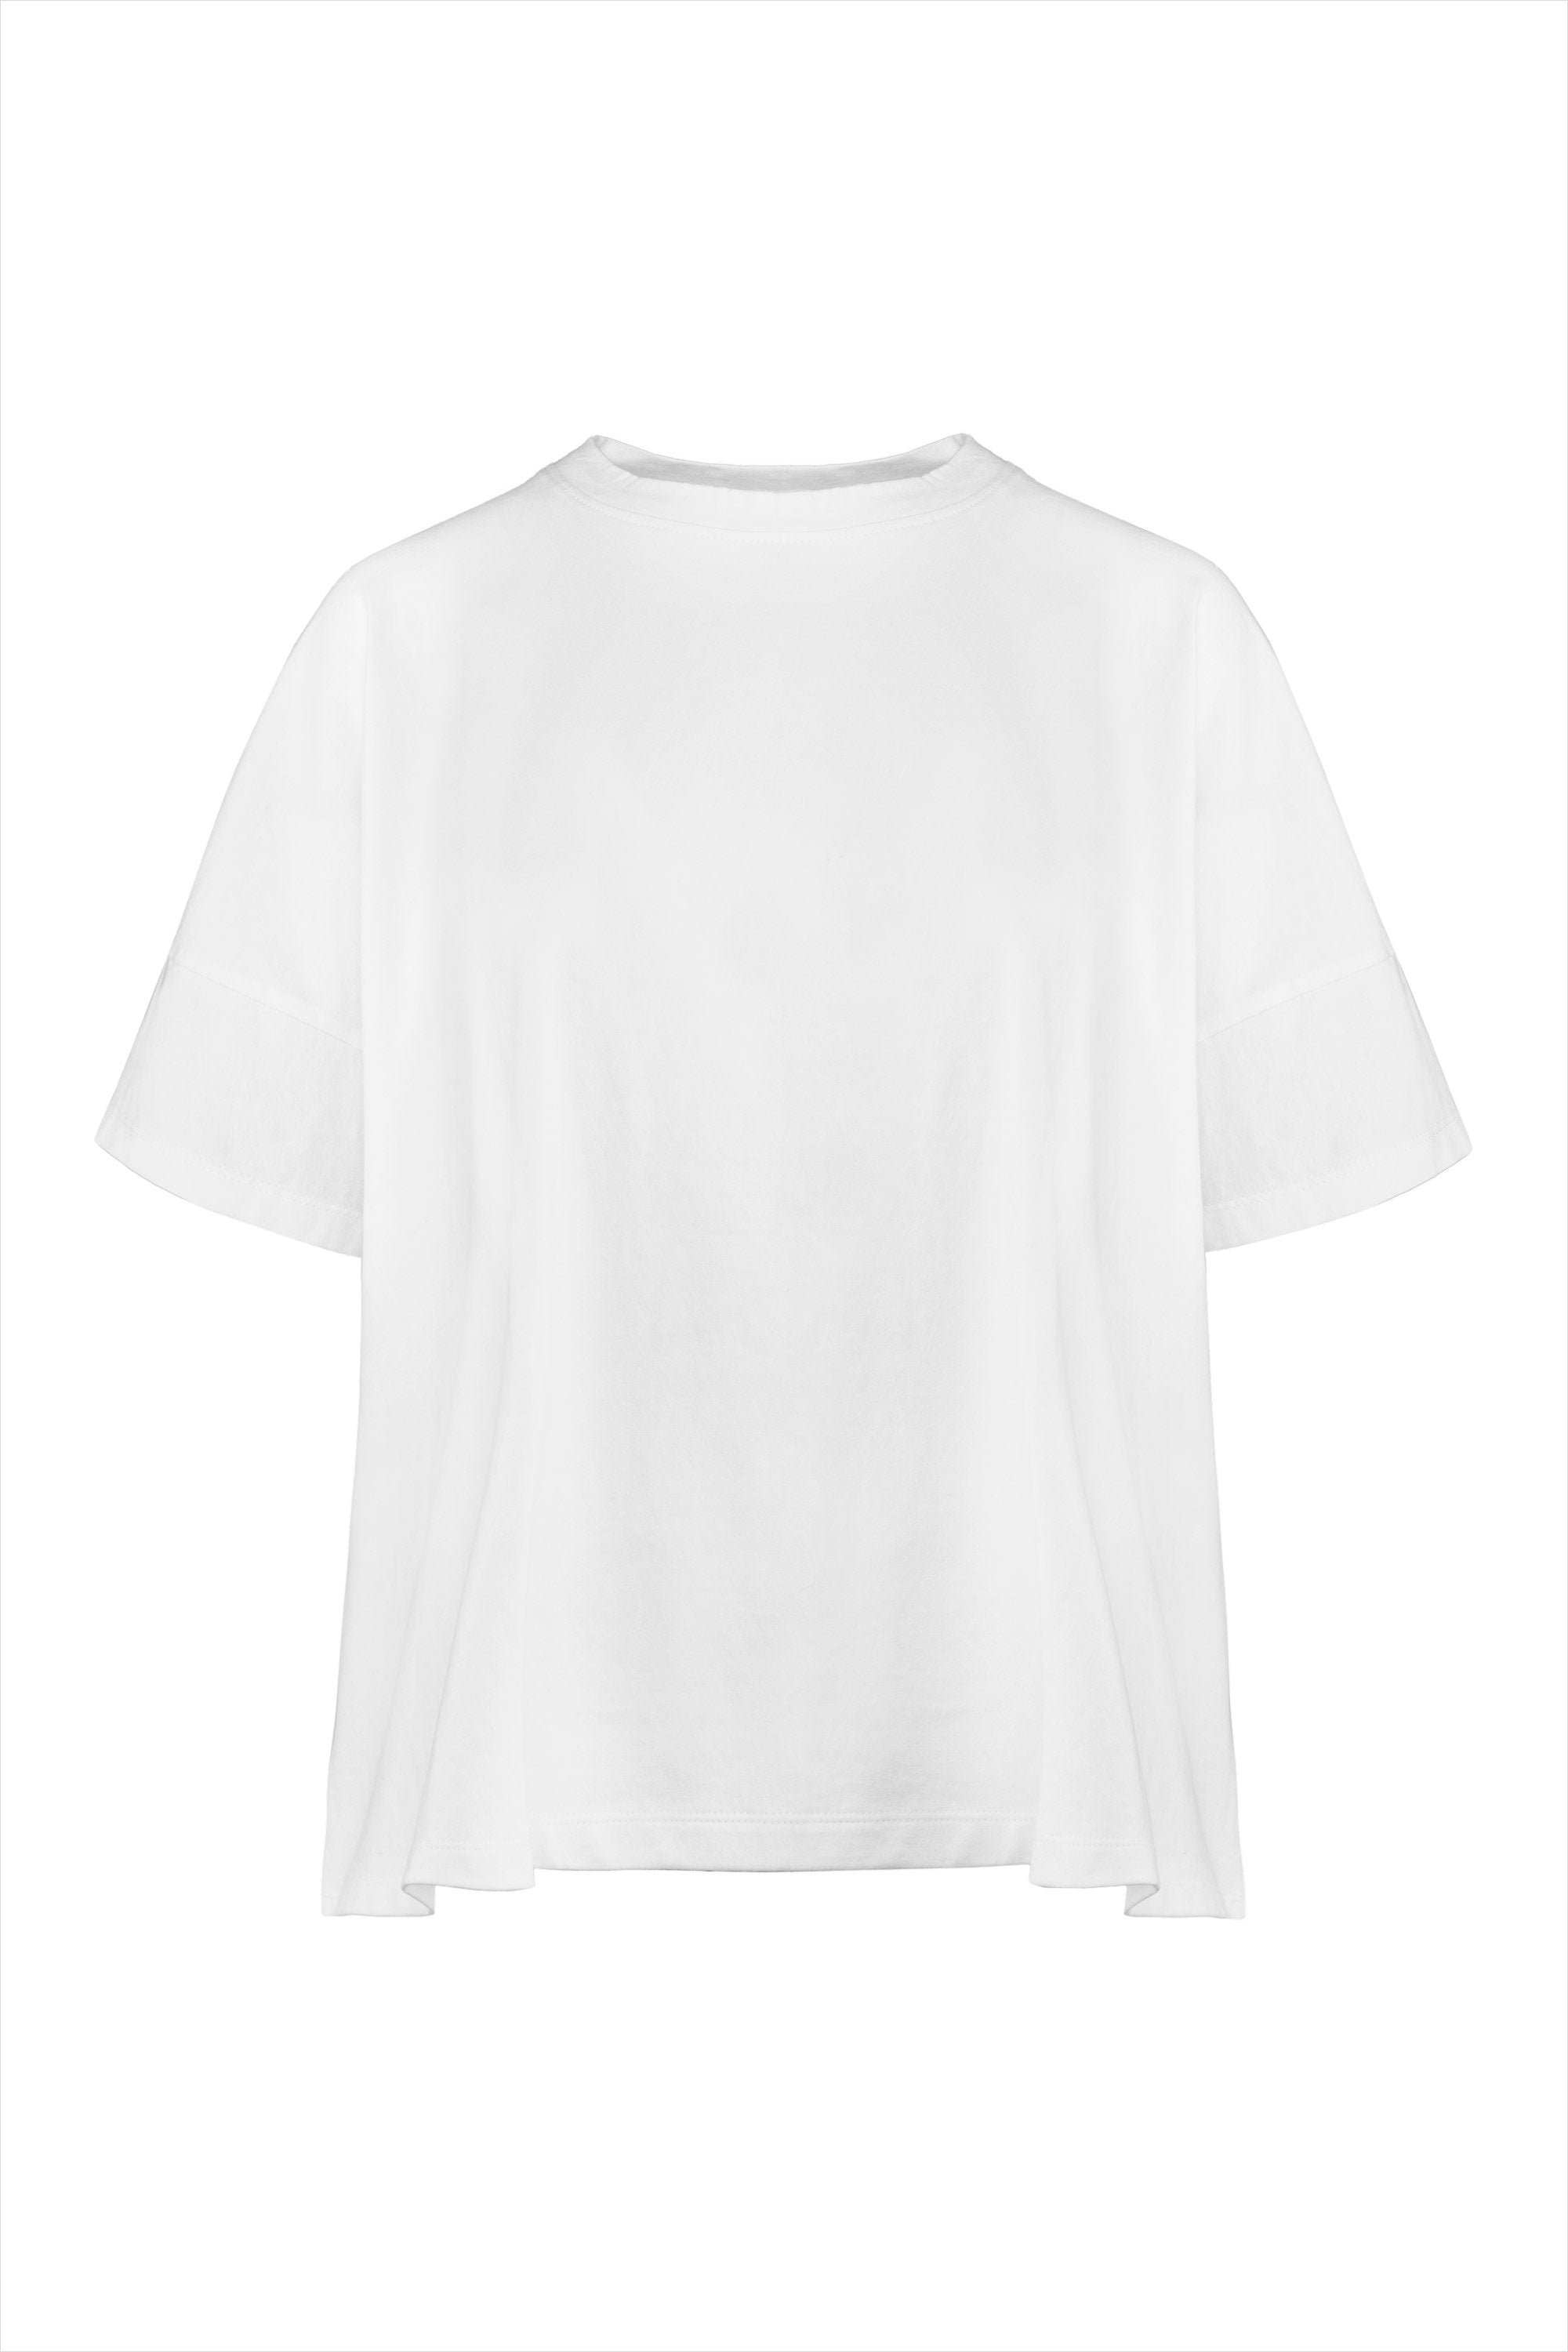 Bomboogie T-shirt manica corta TW7441TJORI 01 white